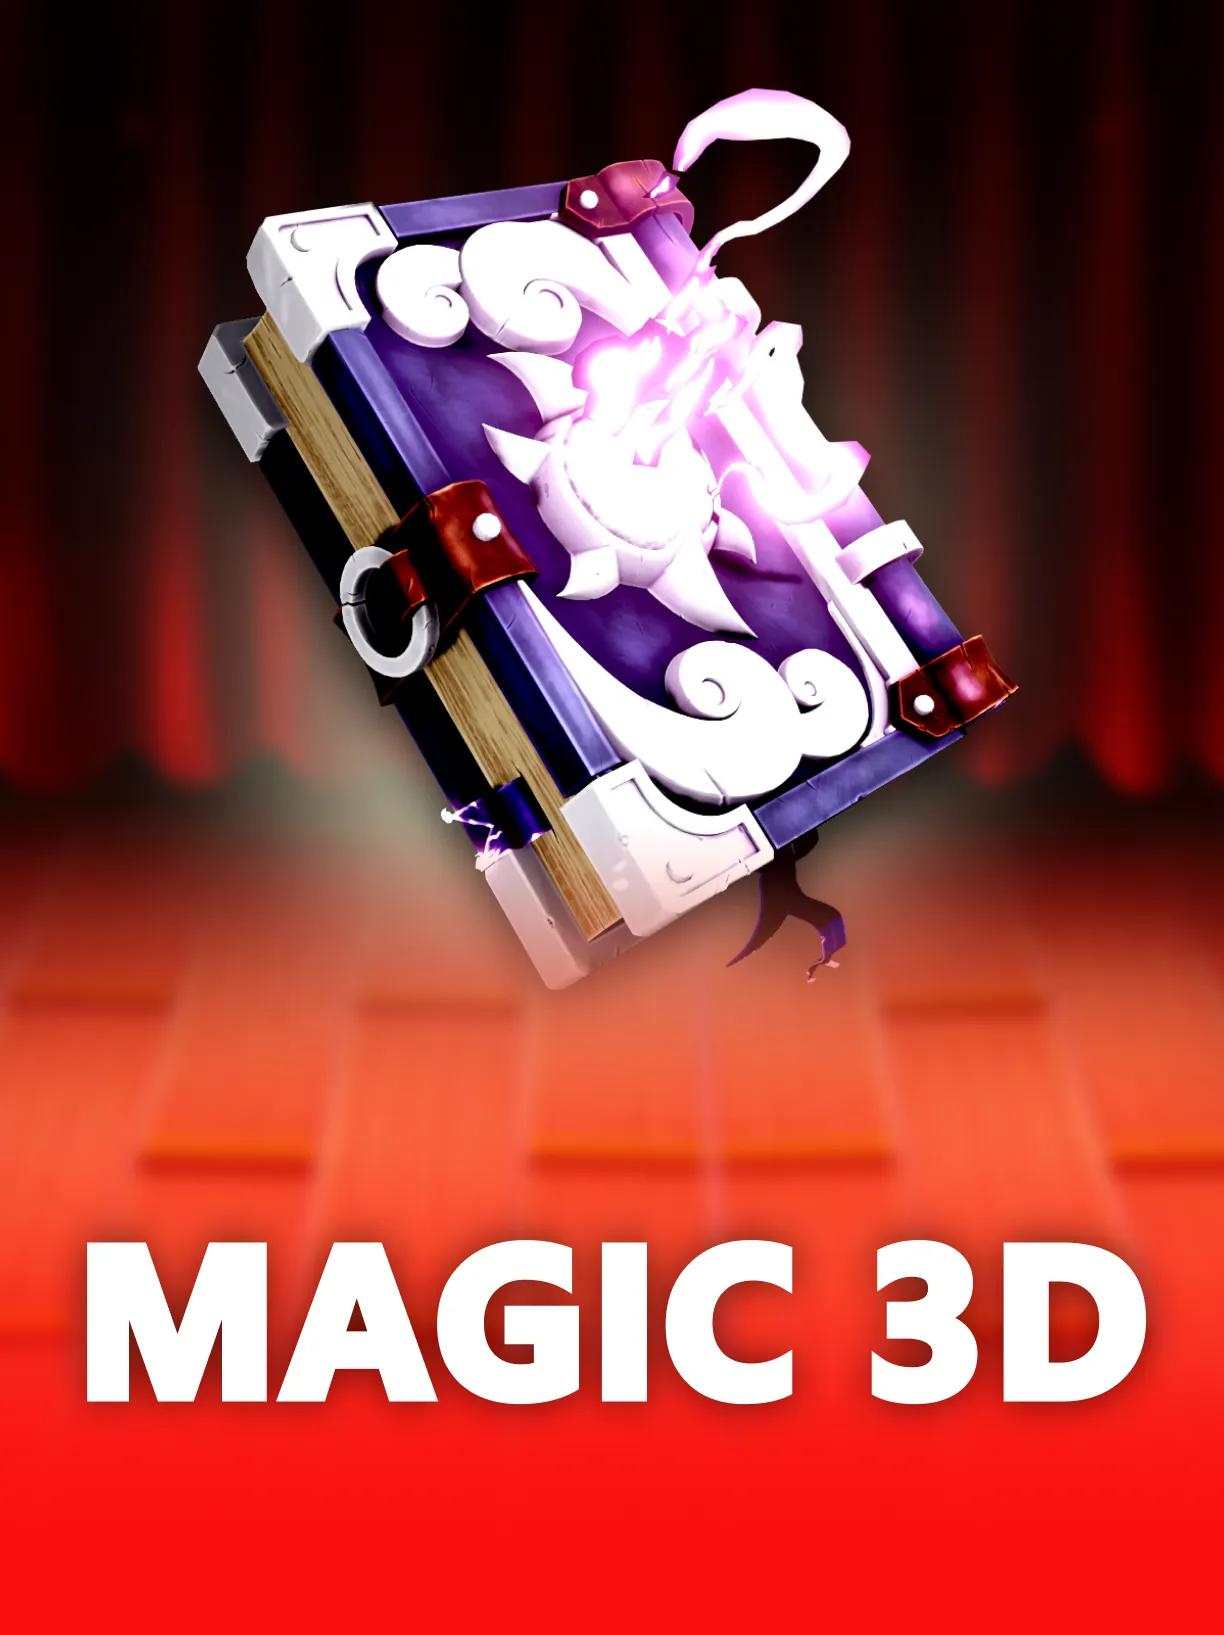 ug_Magic3D_square.webp